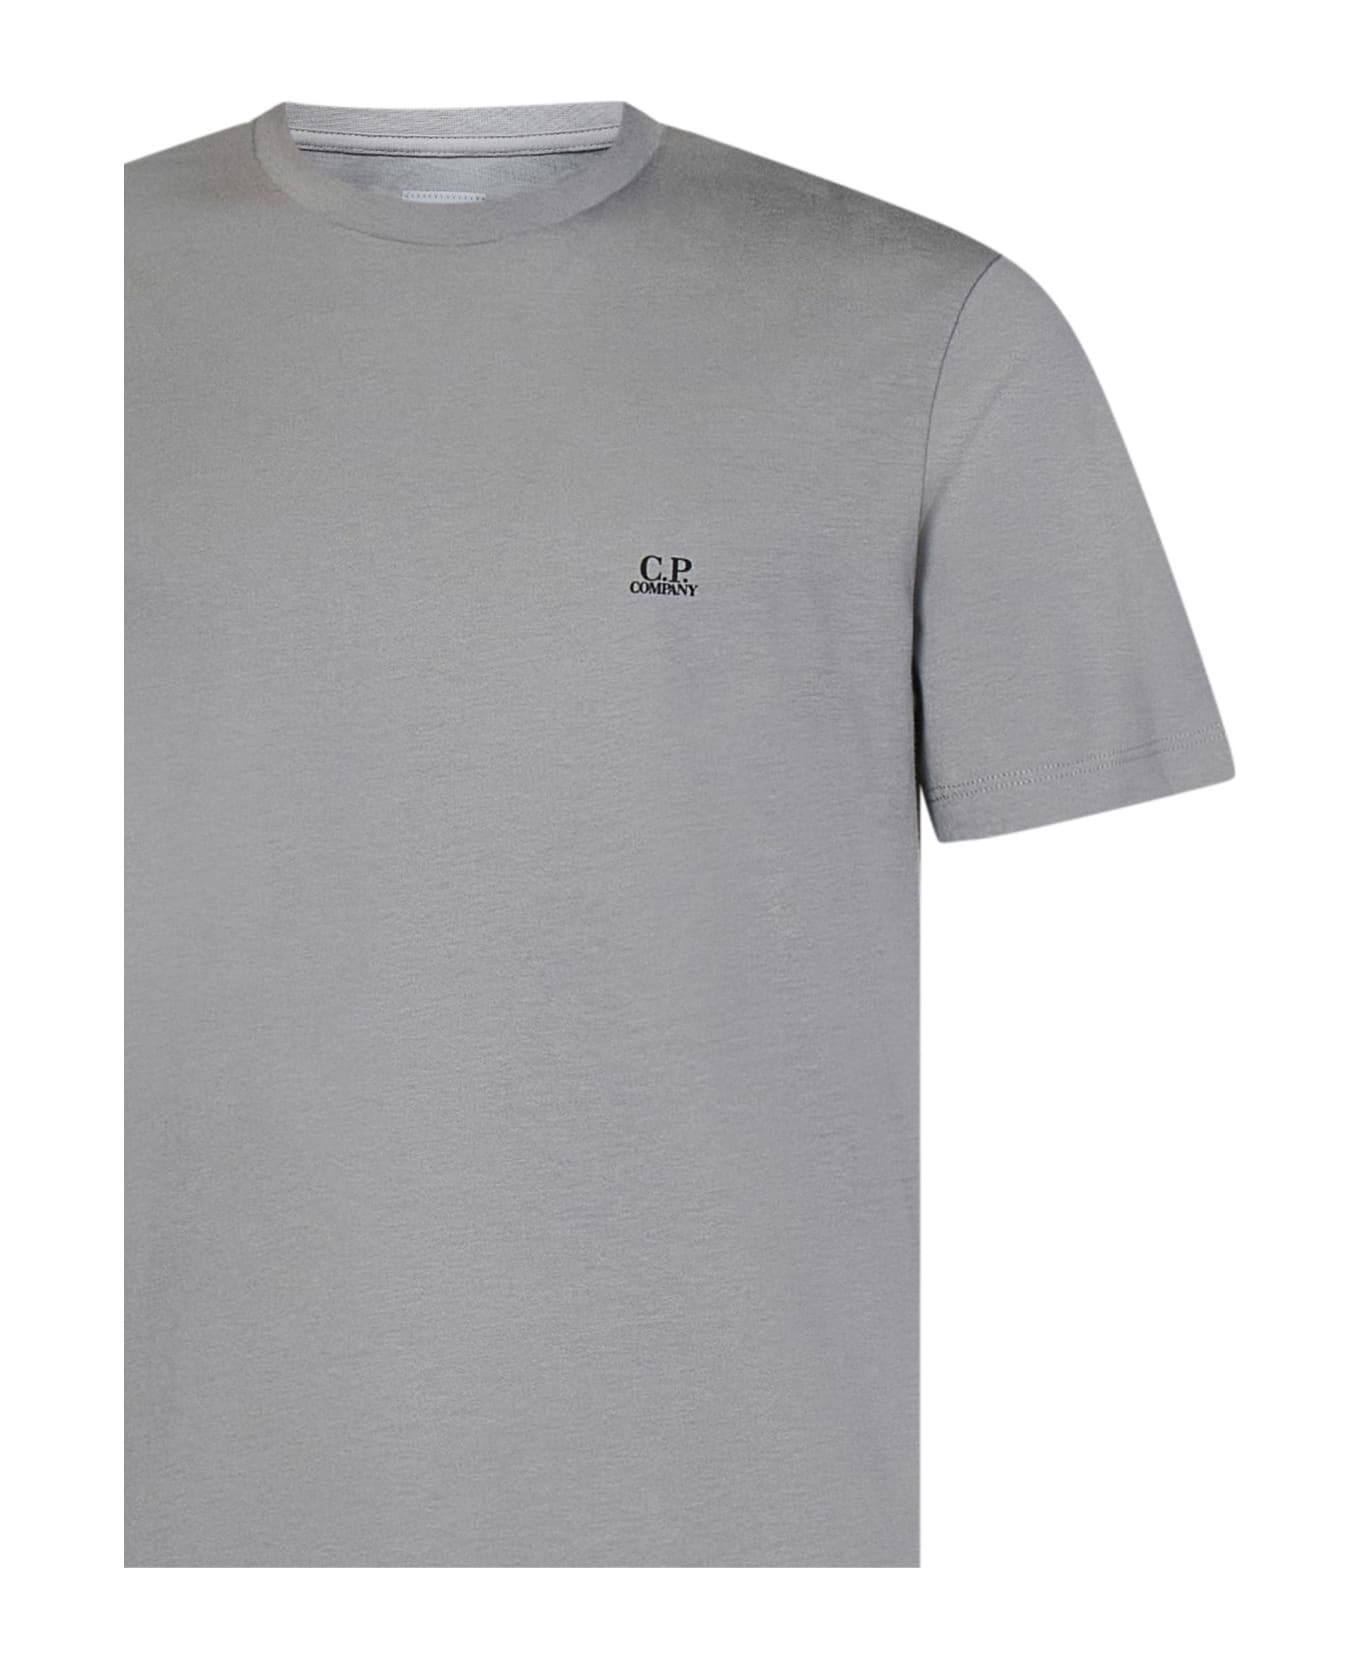 C.P. Company T-shirt - Grey シャツ